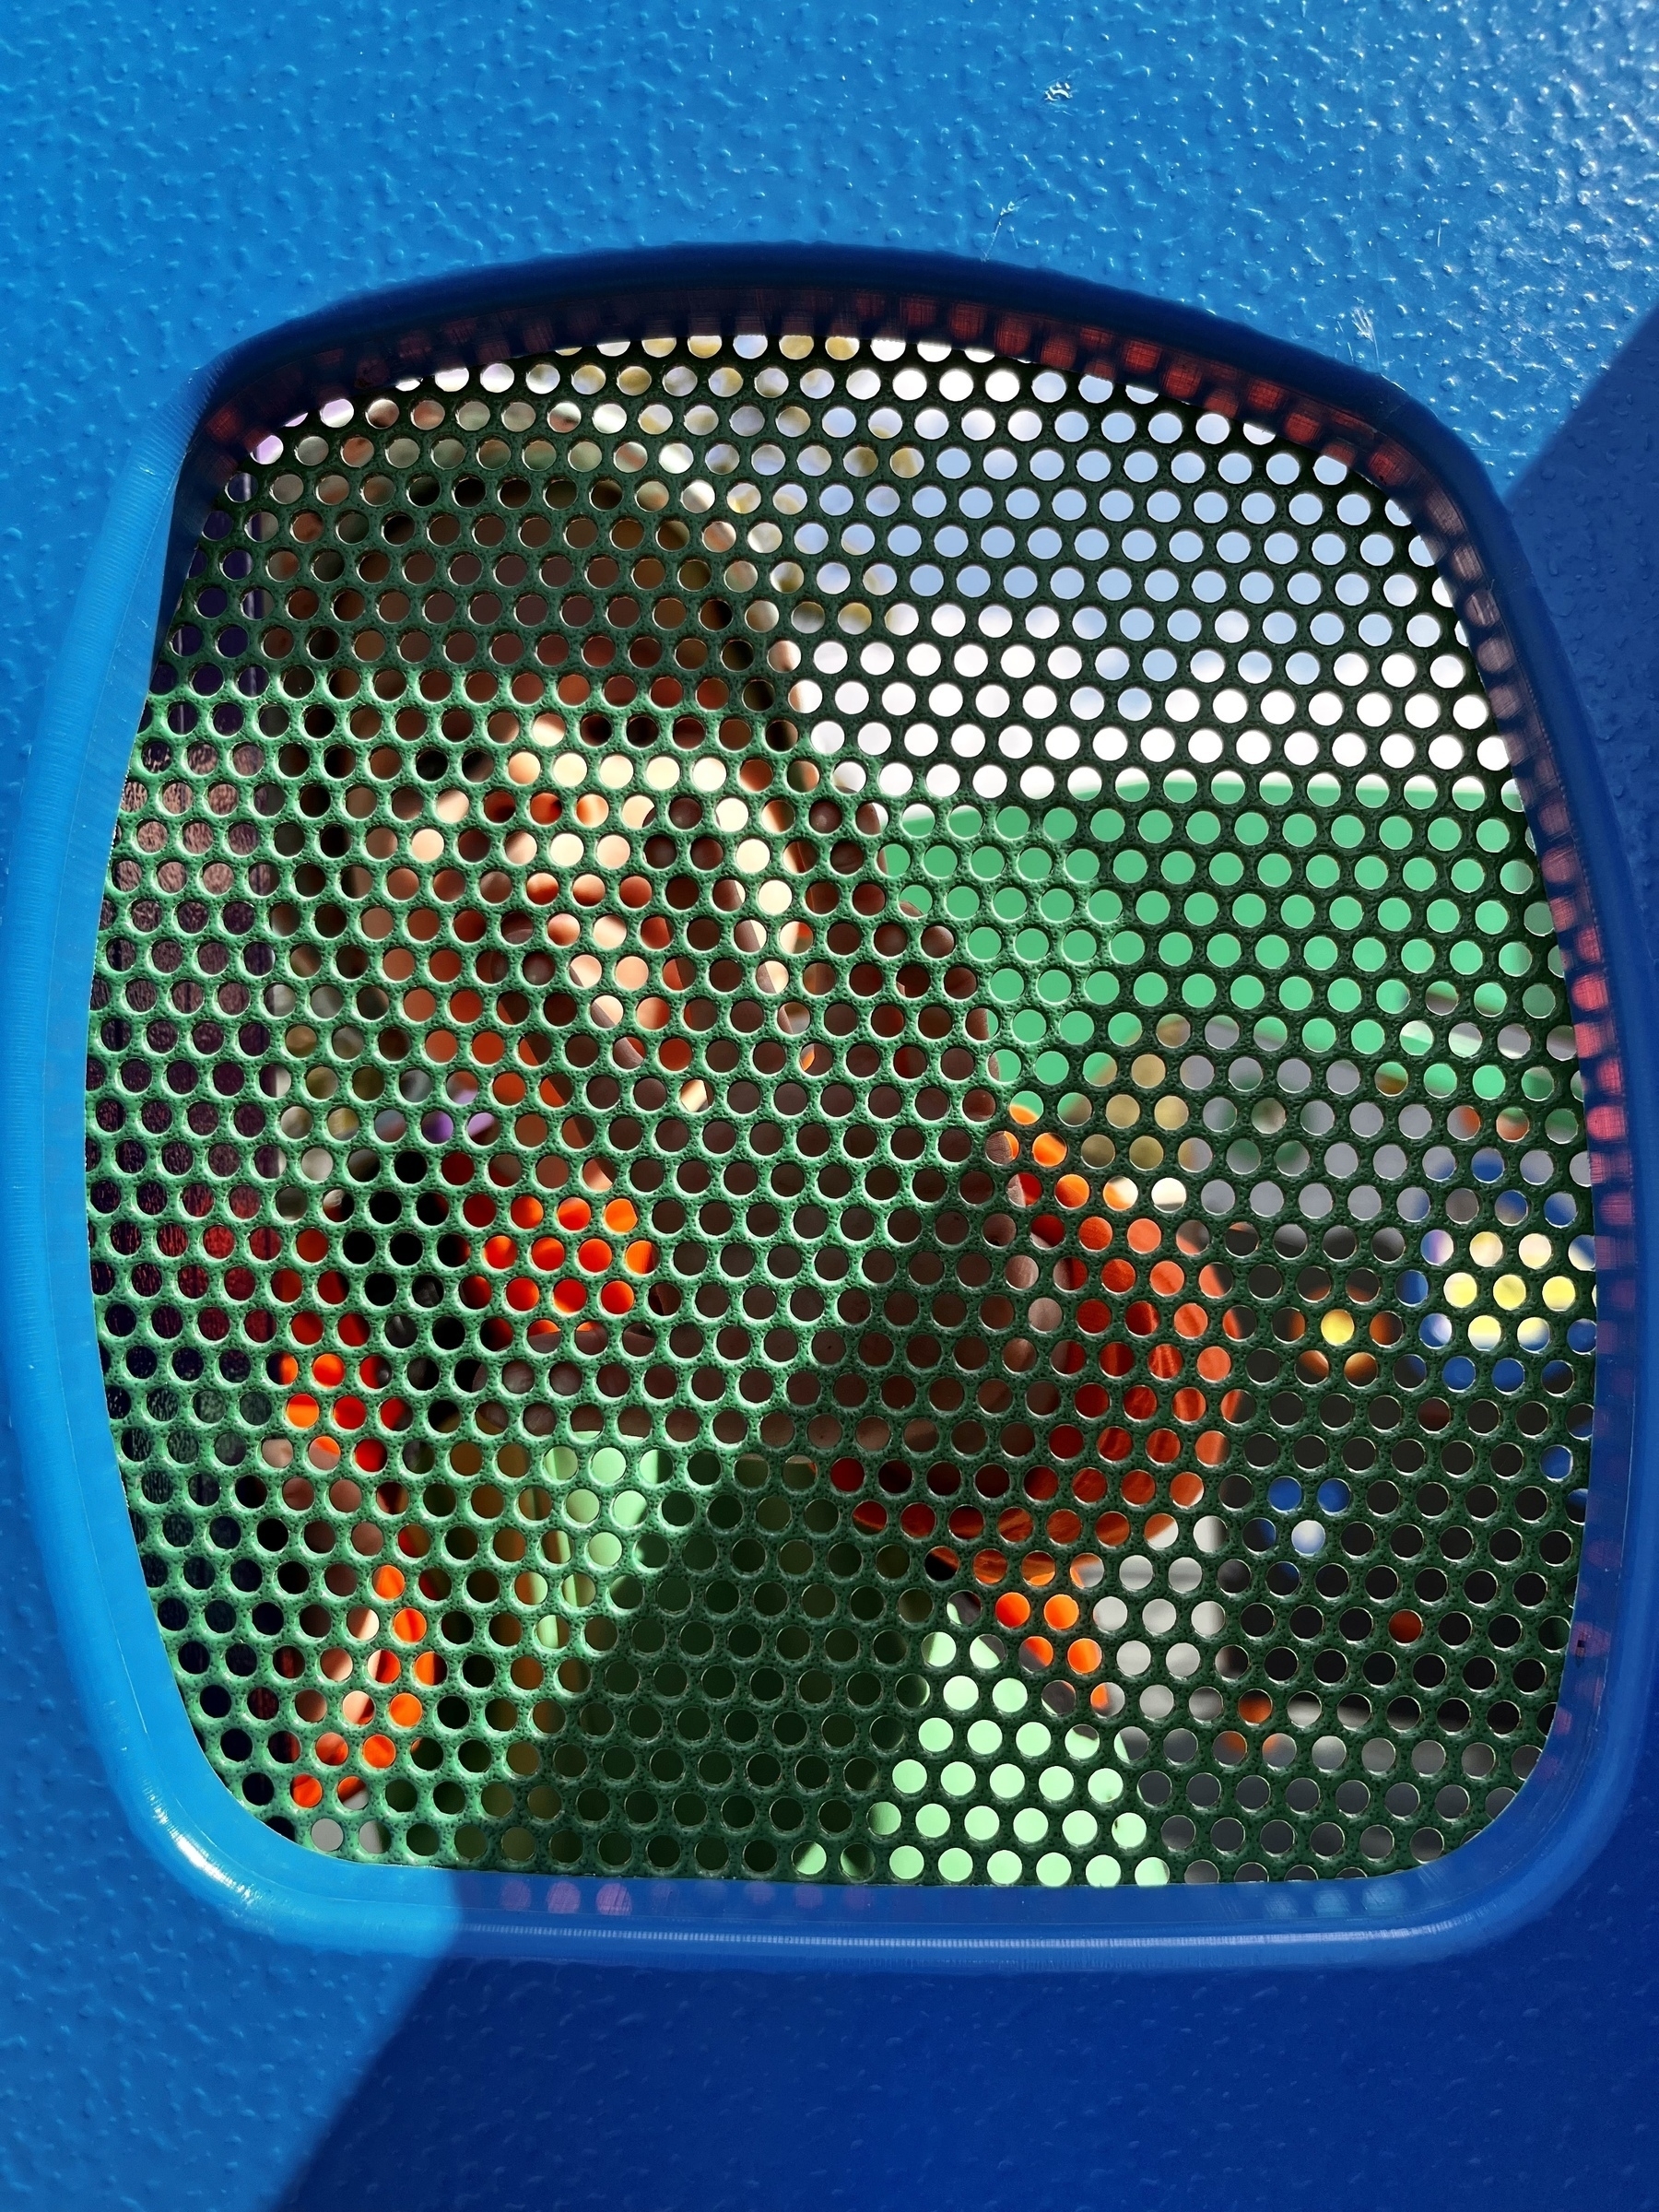 A baby through hazy mesh on play equipment